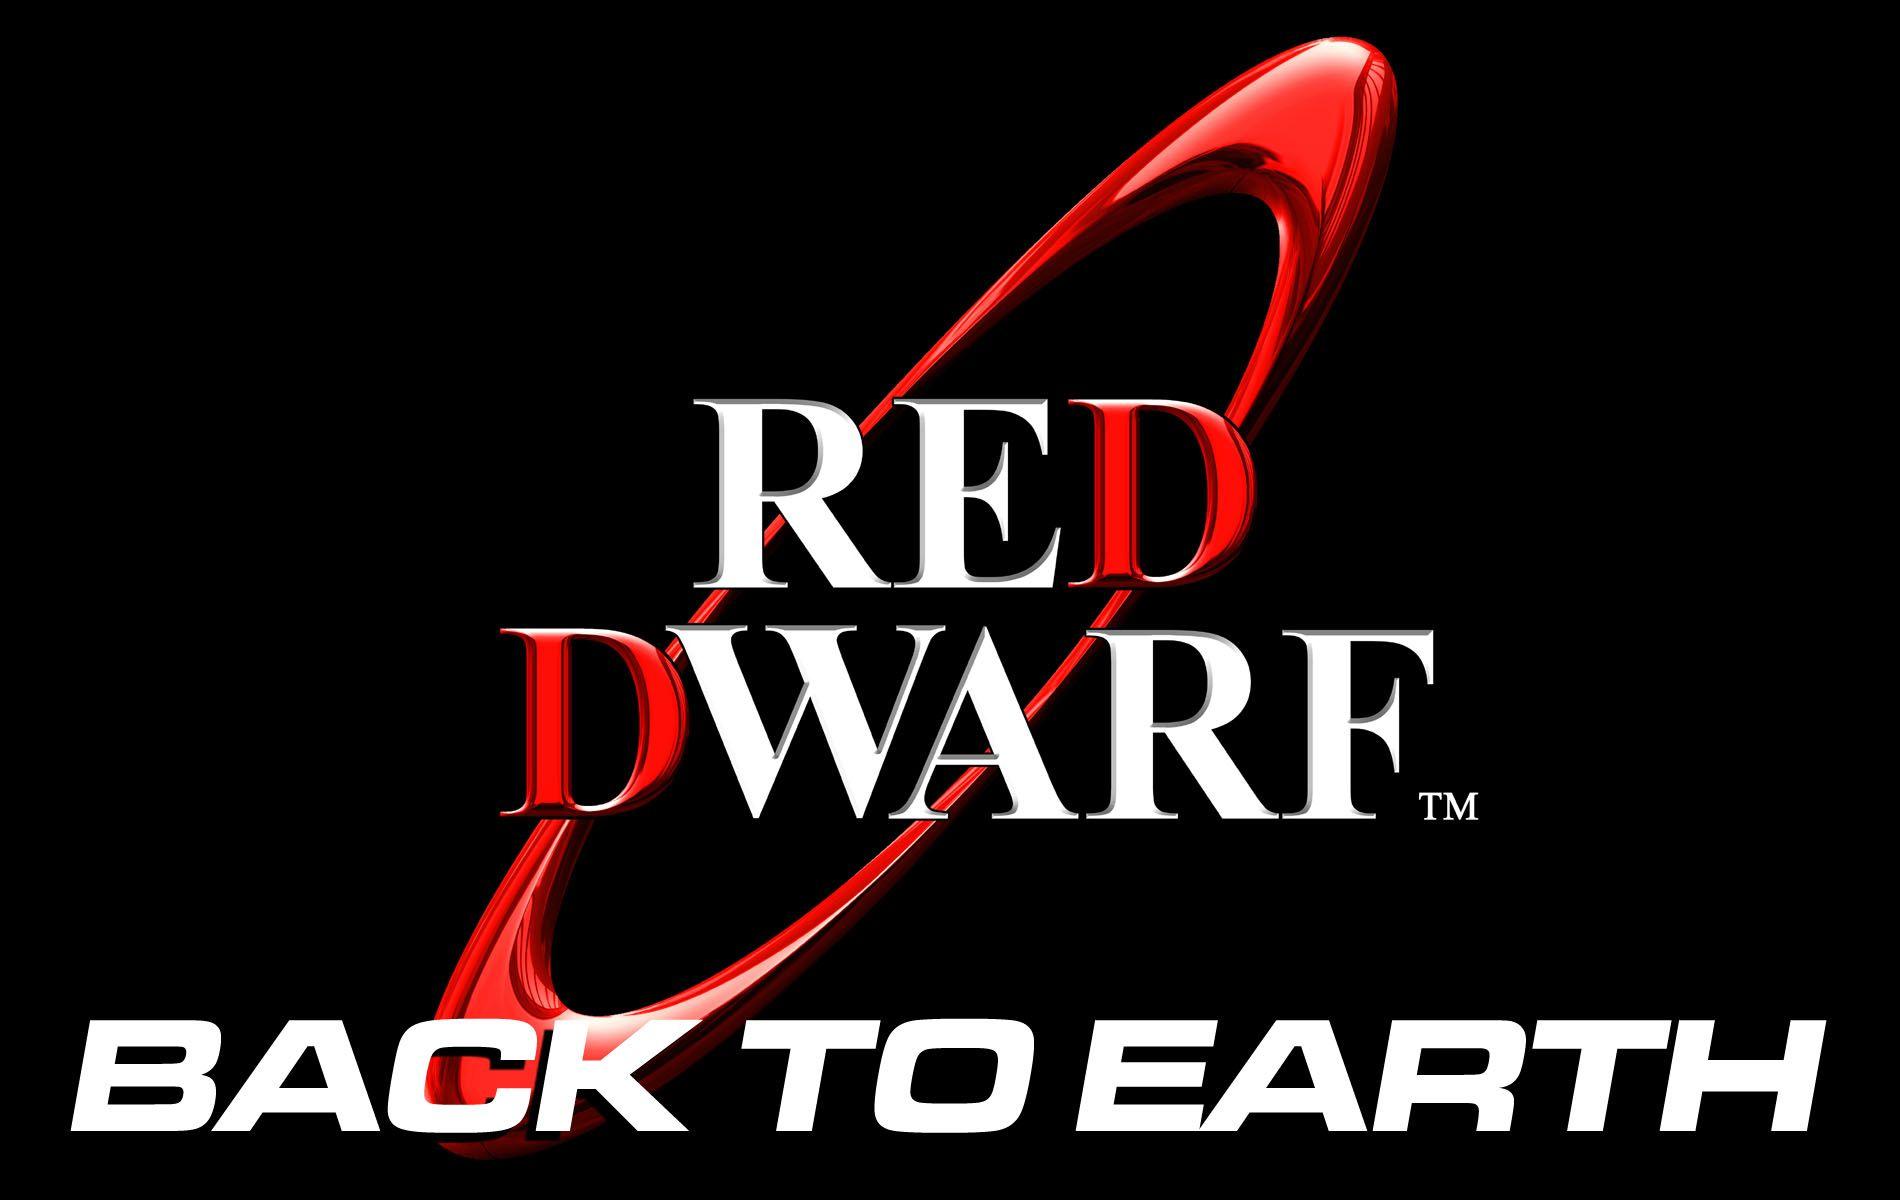 Red Dwarf Logo - Downloads | Red Dwarf - The Official Website